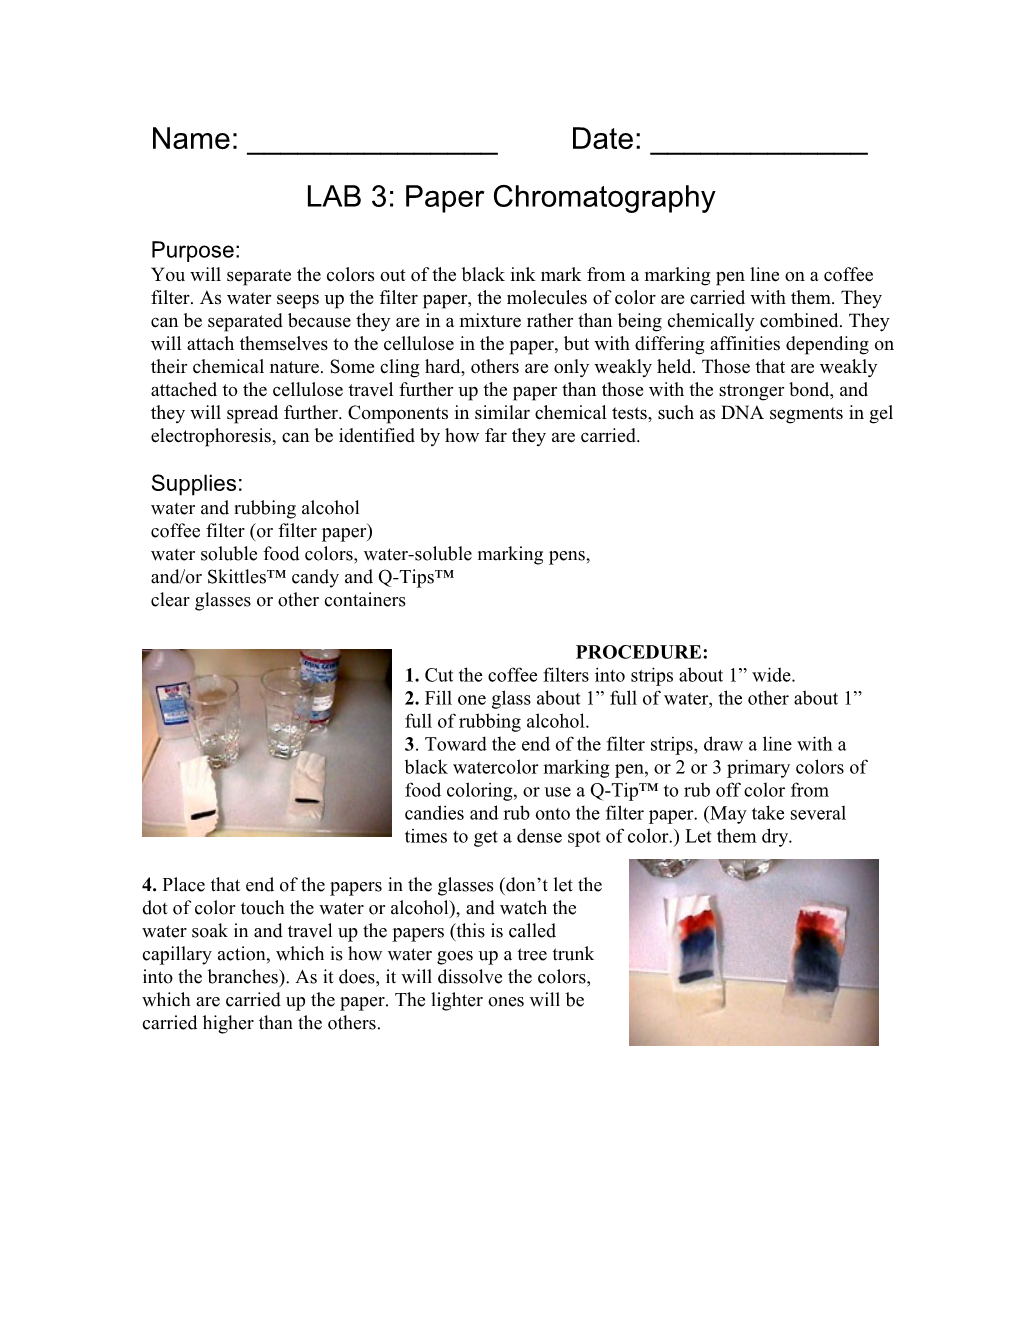 LAB 3: Paper Chromatography